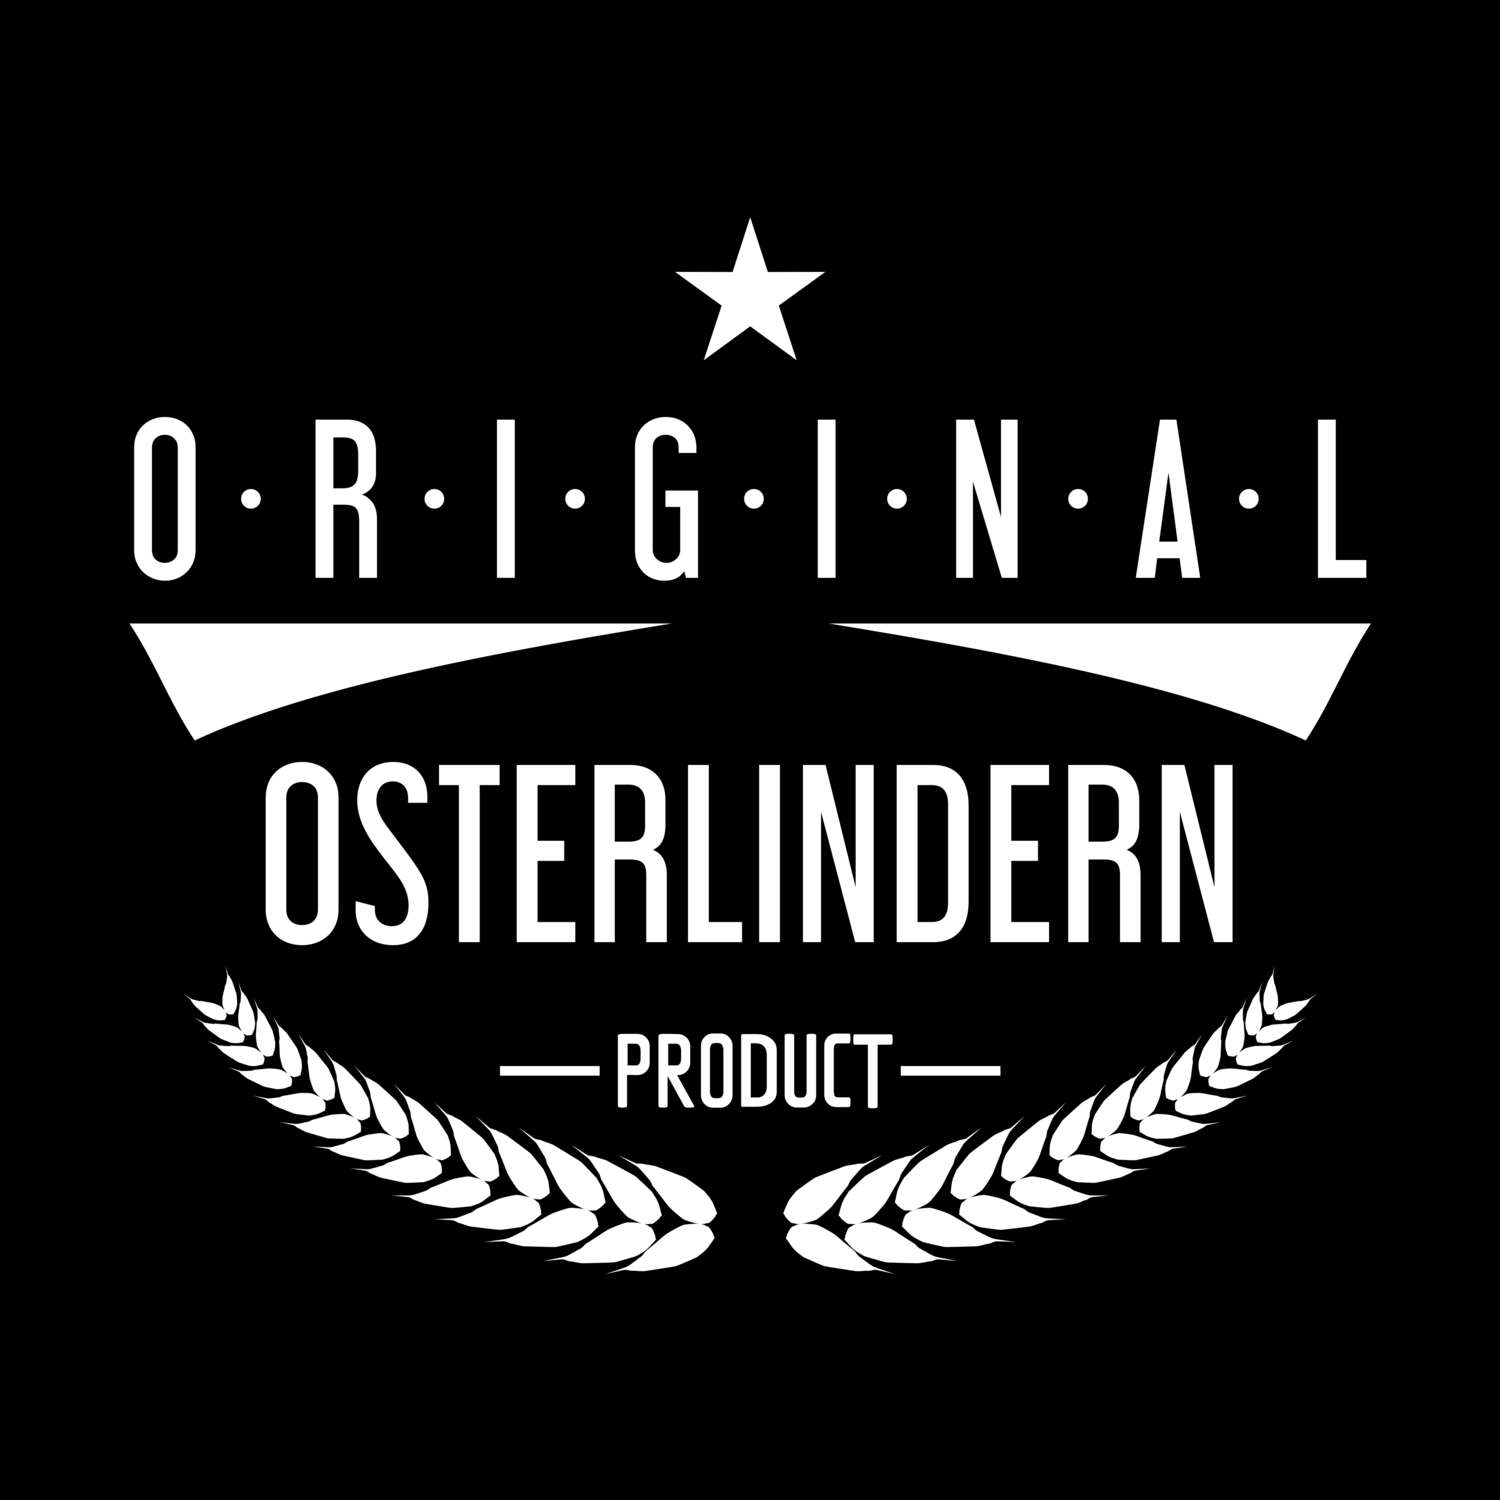 Osterlindern T-Shirt »Original Product«